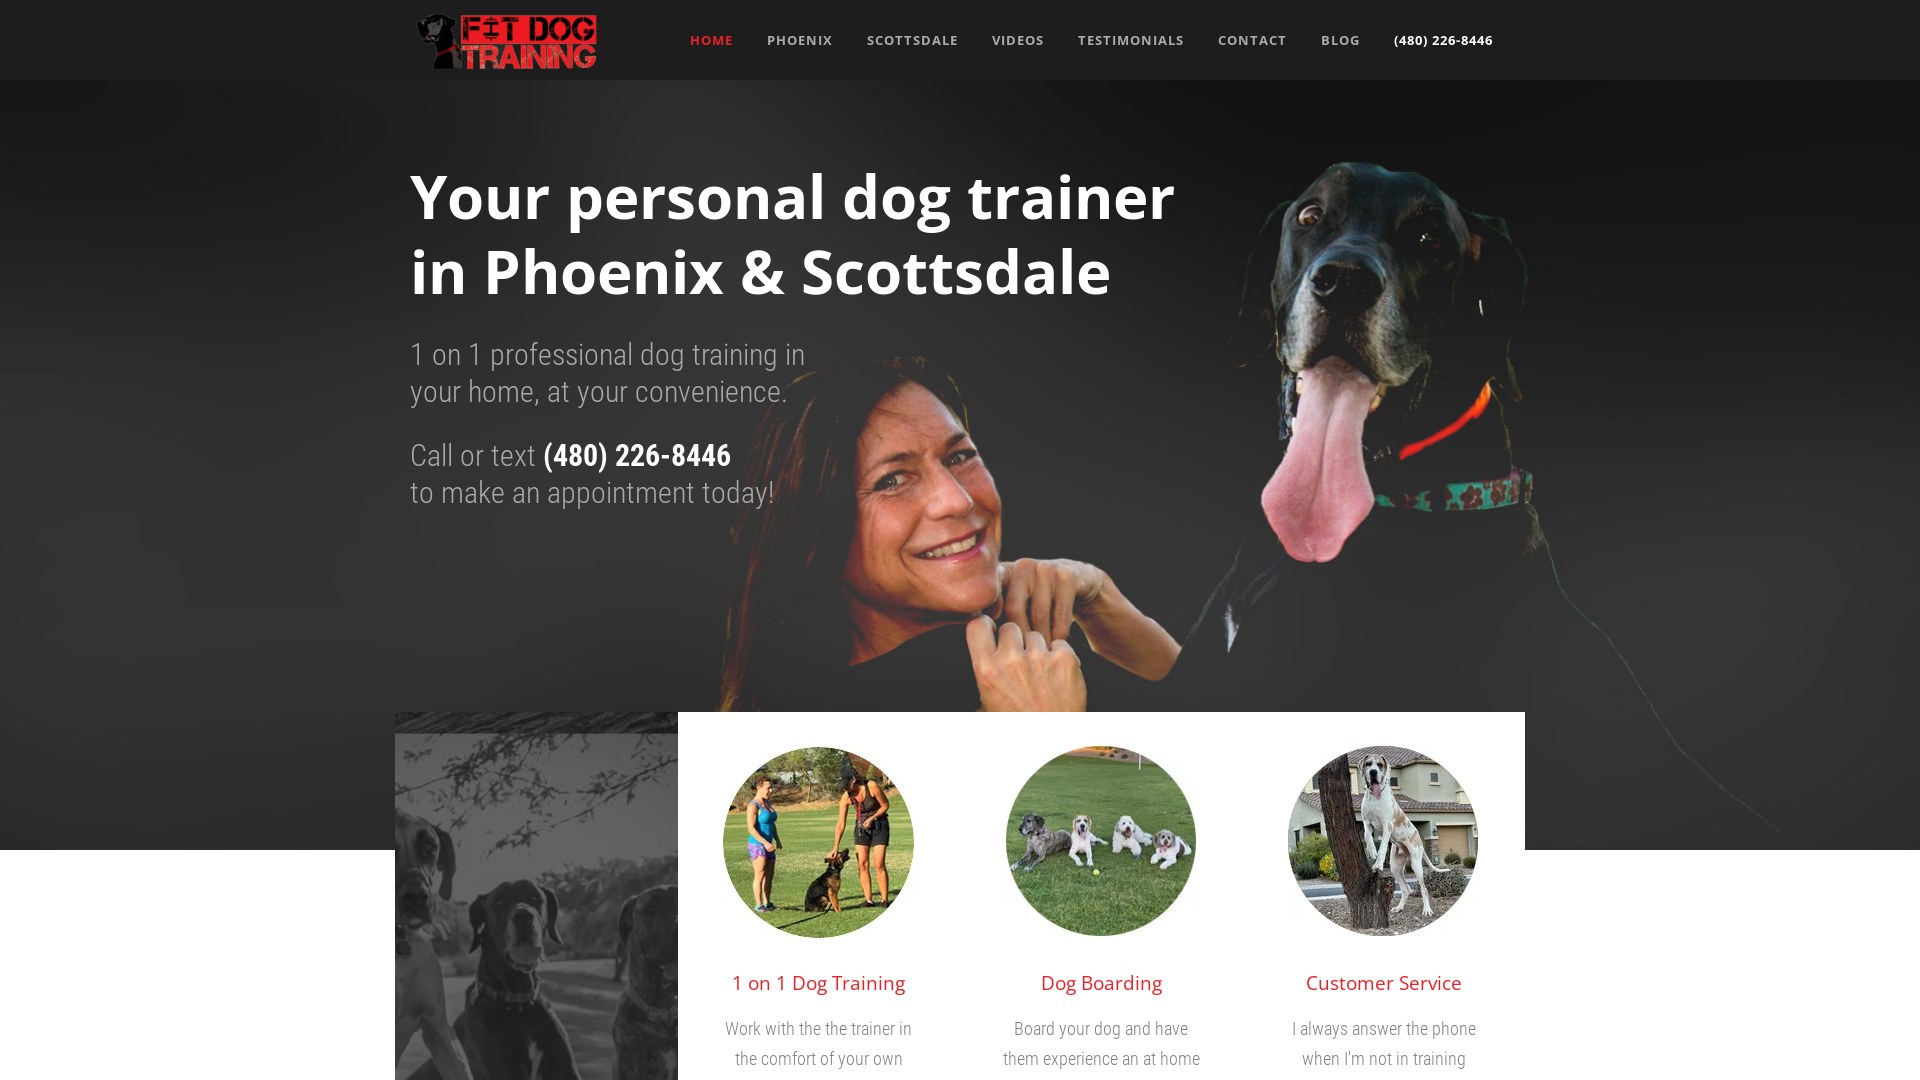 Fit Dog Training